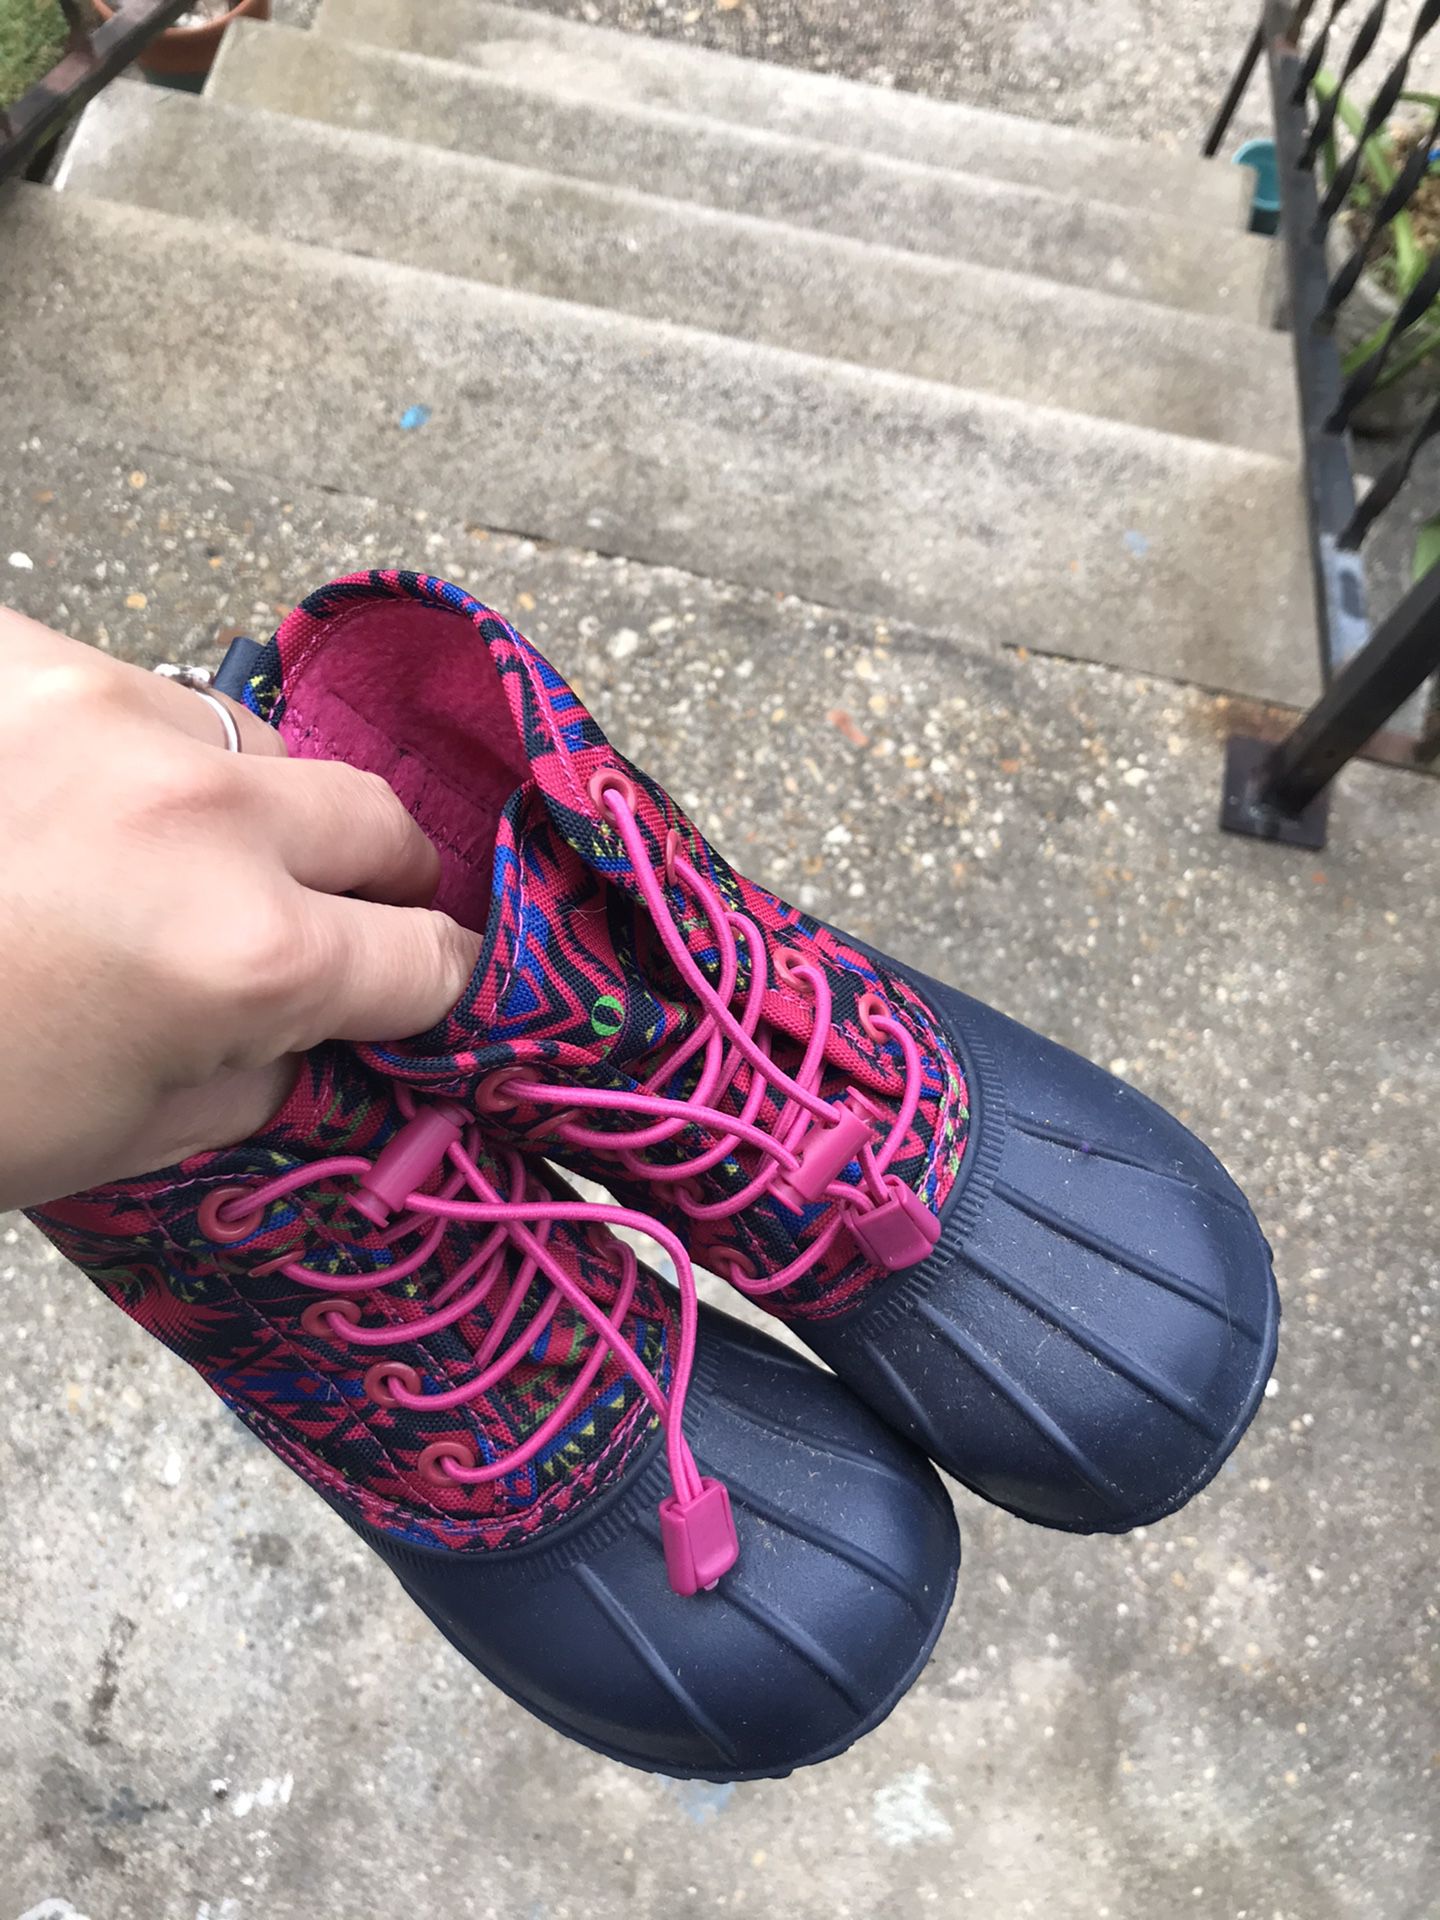 Polo rain/snow boots